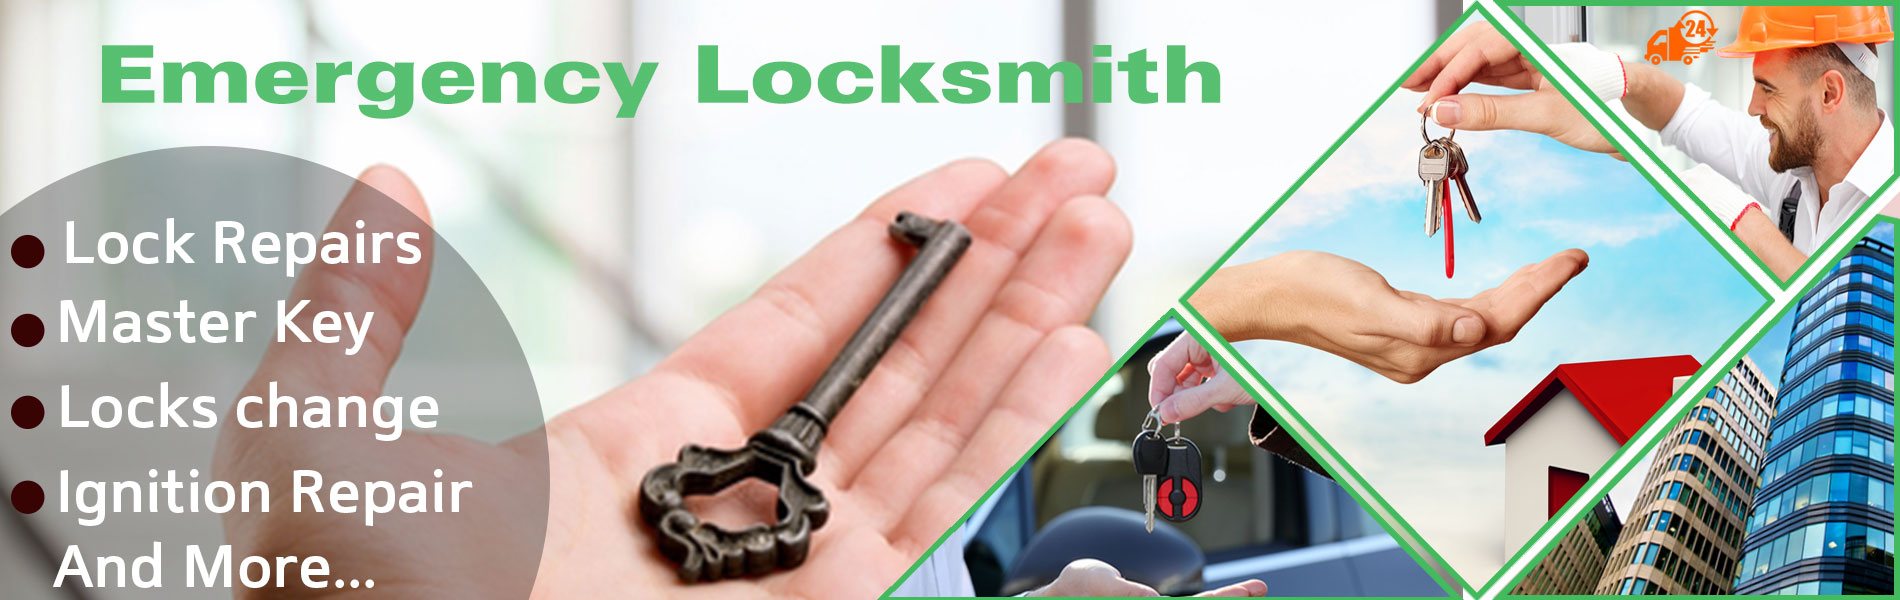 Lock Safe Services Atlanta, GA 404-479-7518